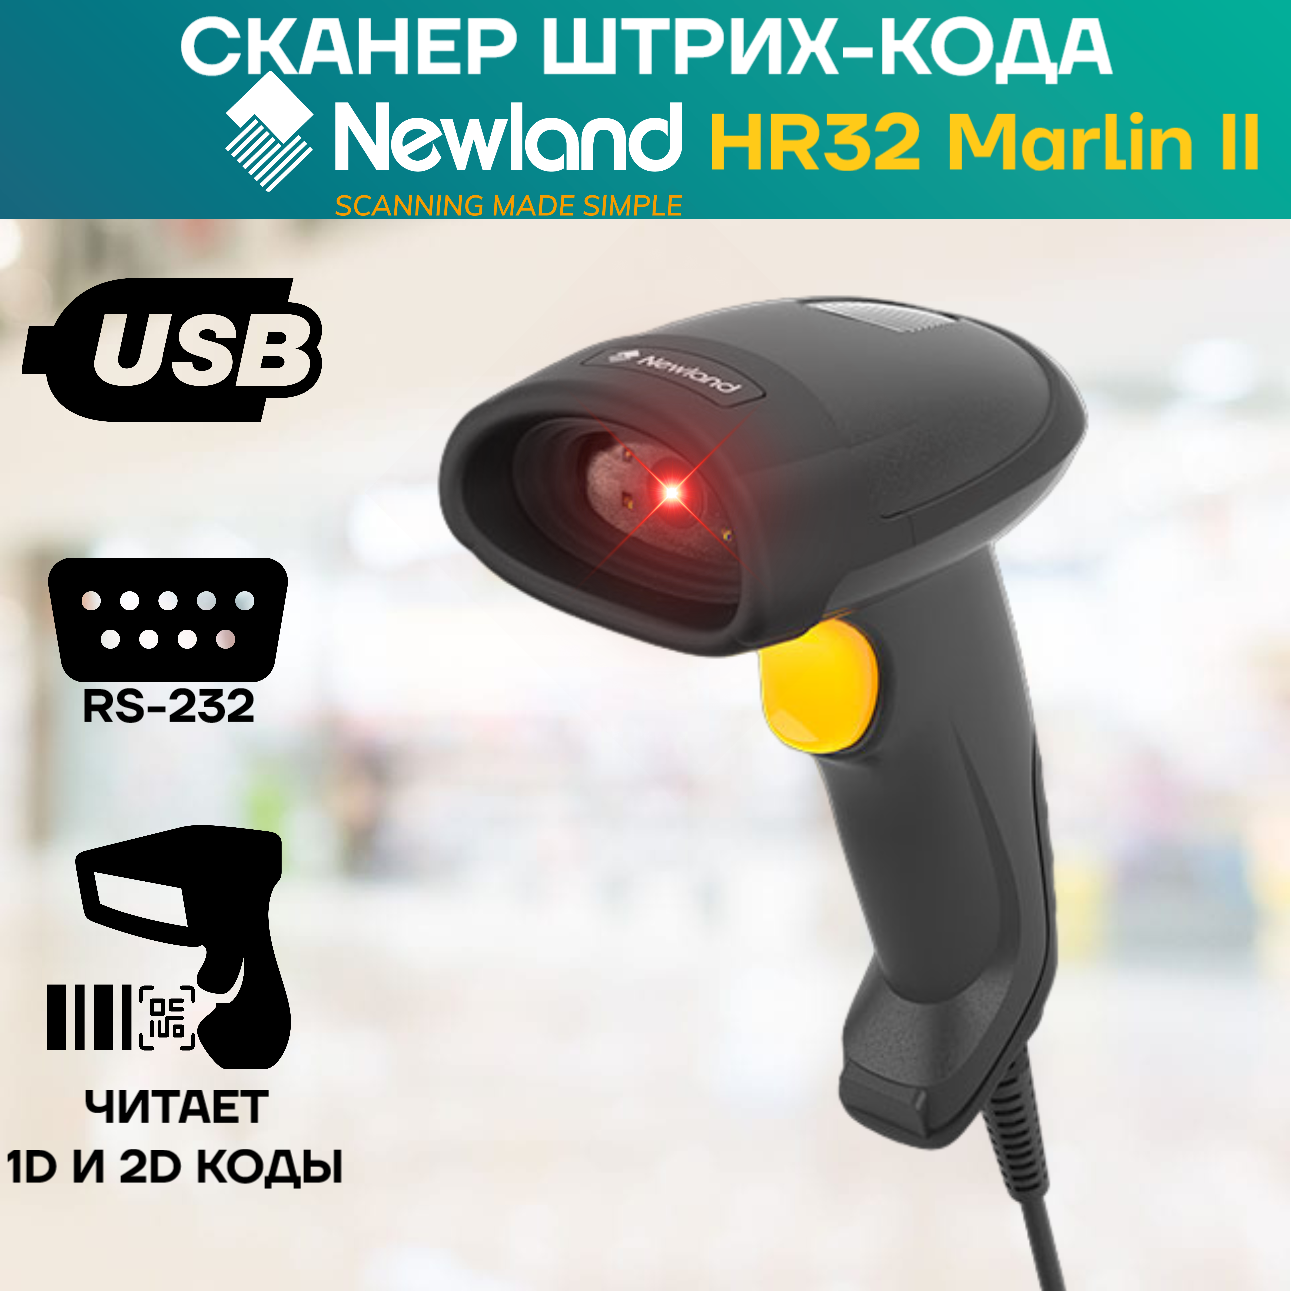 Сканер штрих-кода Newland HR32 Marlin II LITE- 2D CMOS Handheld Reader with USB cable. autosense. (smart stand compatible)